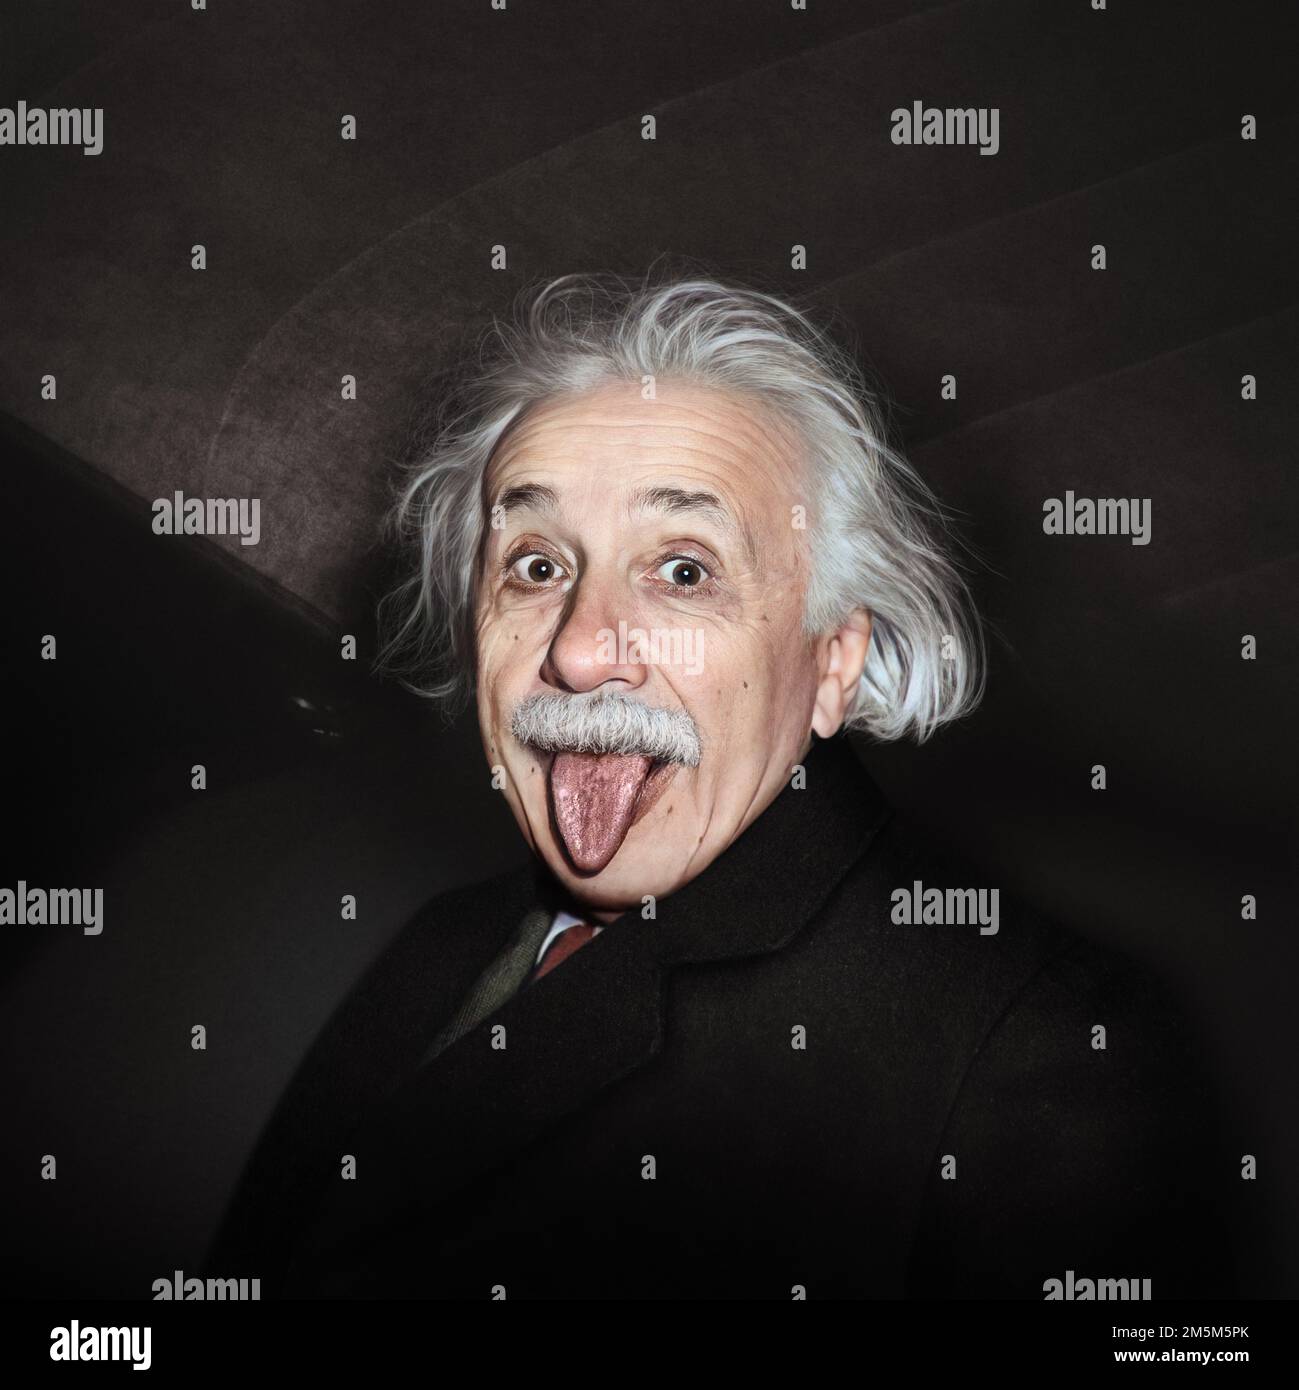 Albert Einstein sticking out his tongue Stock Photo